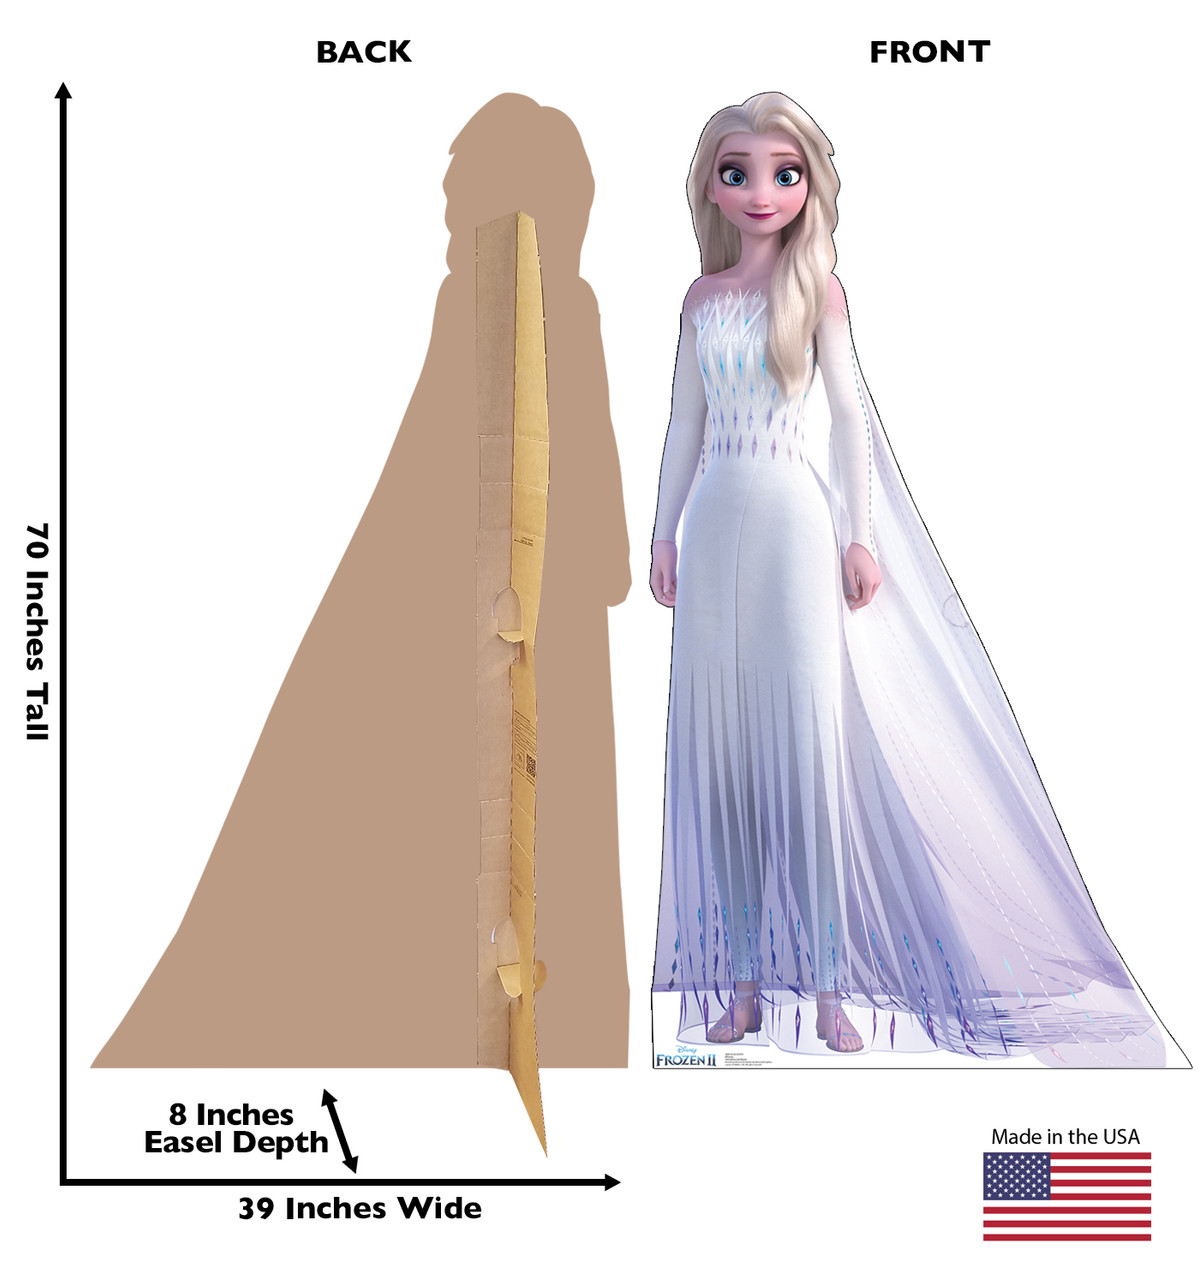 Frozen 2 Elsa Deluxe Princess Dress Costume for Girl Cosplay Christmas  Party Dresses - Walmart.com